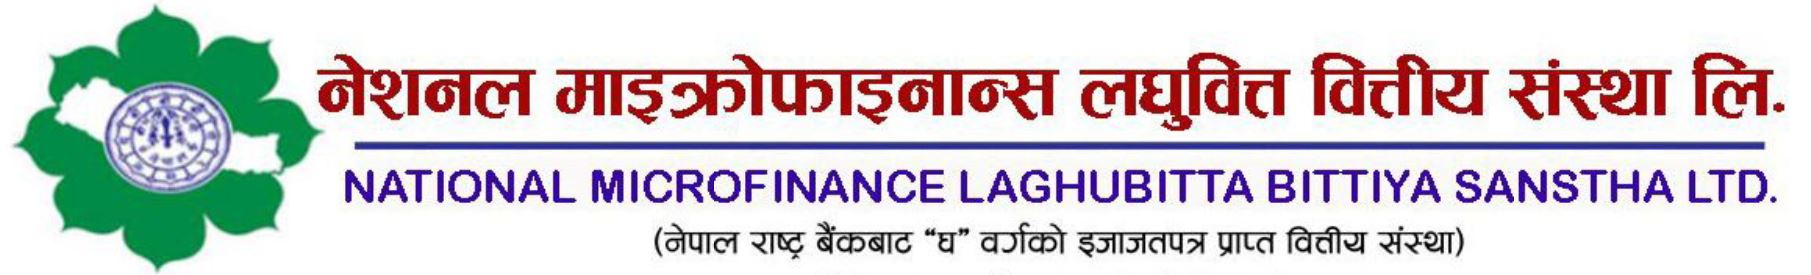 Last trading day to clinch dividend of National Microfinance Laghubitta Bittiya Sanstha (NMFBS)